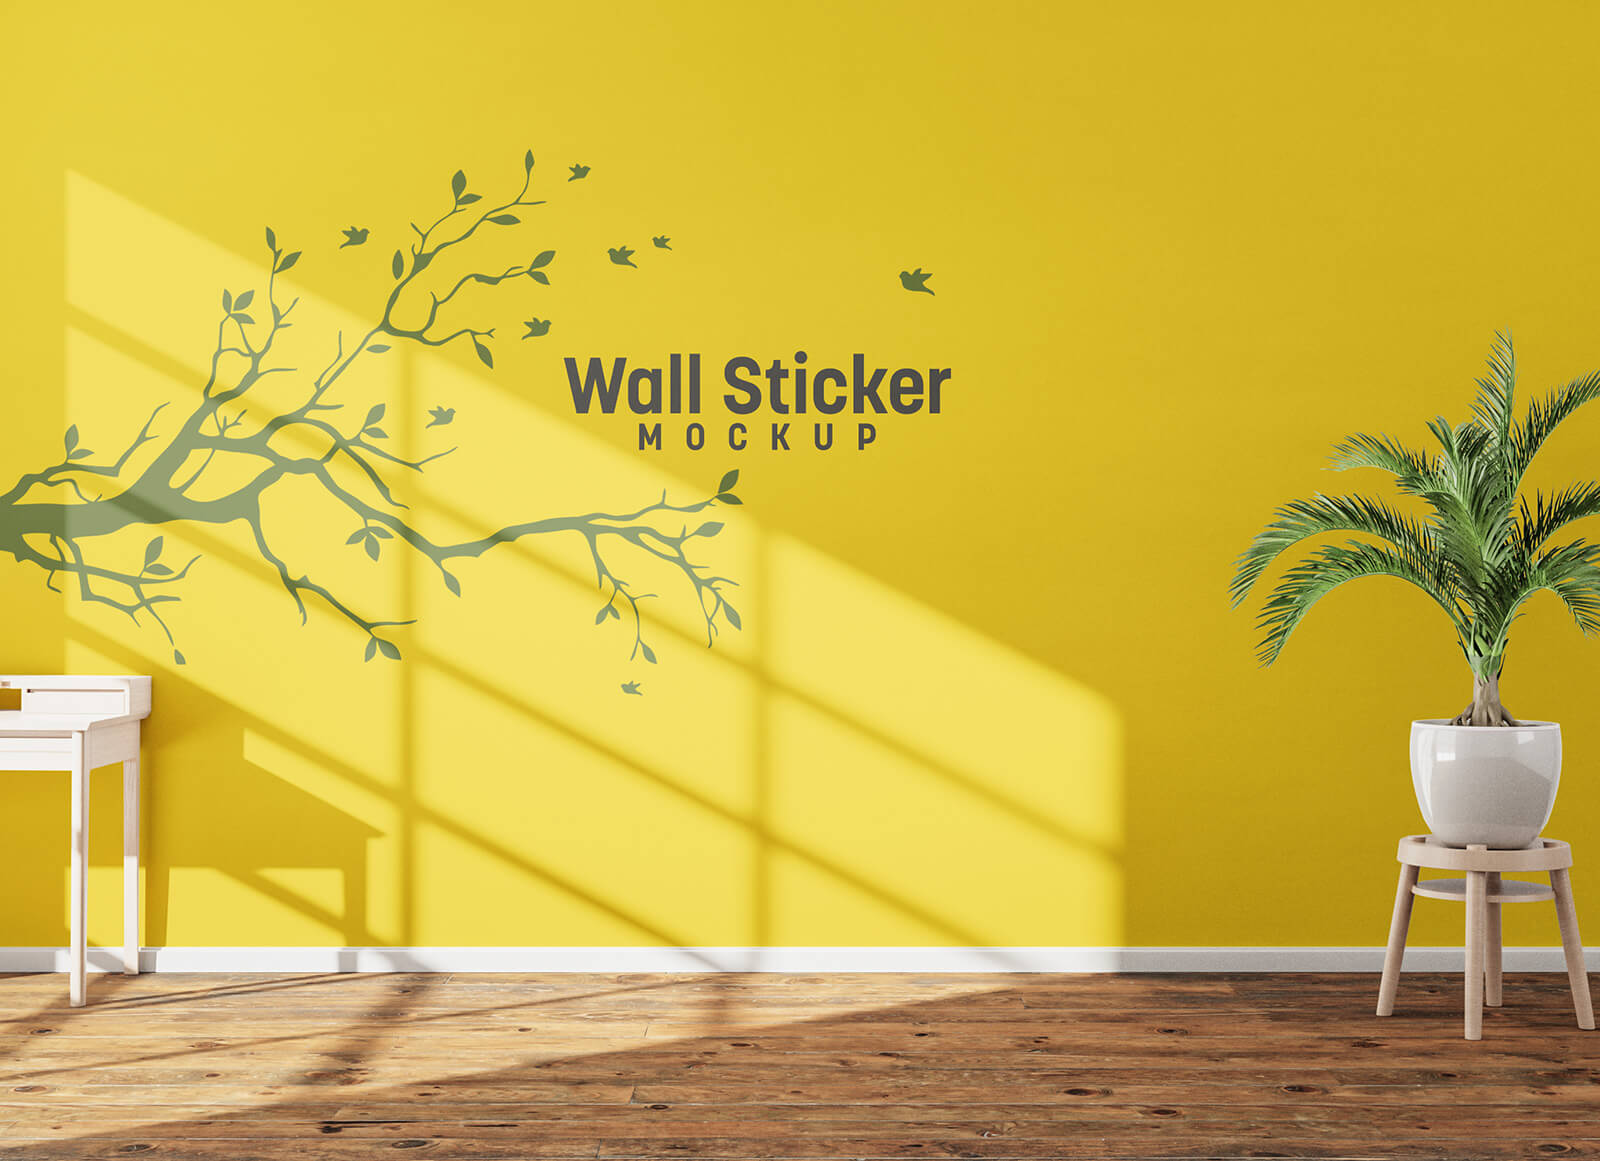  Room Wall Sticker / Decal Mockup